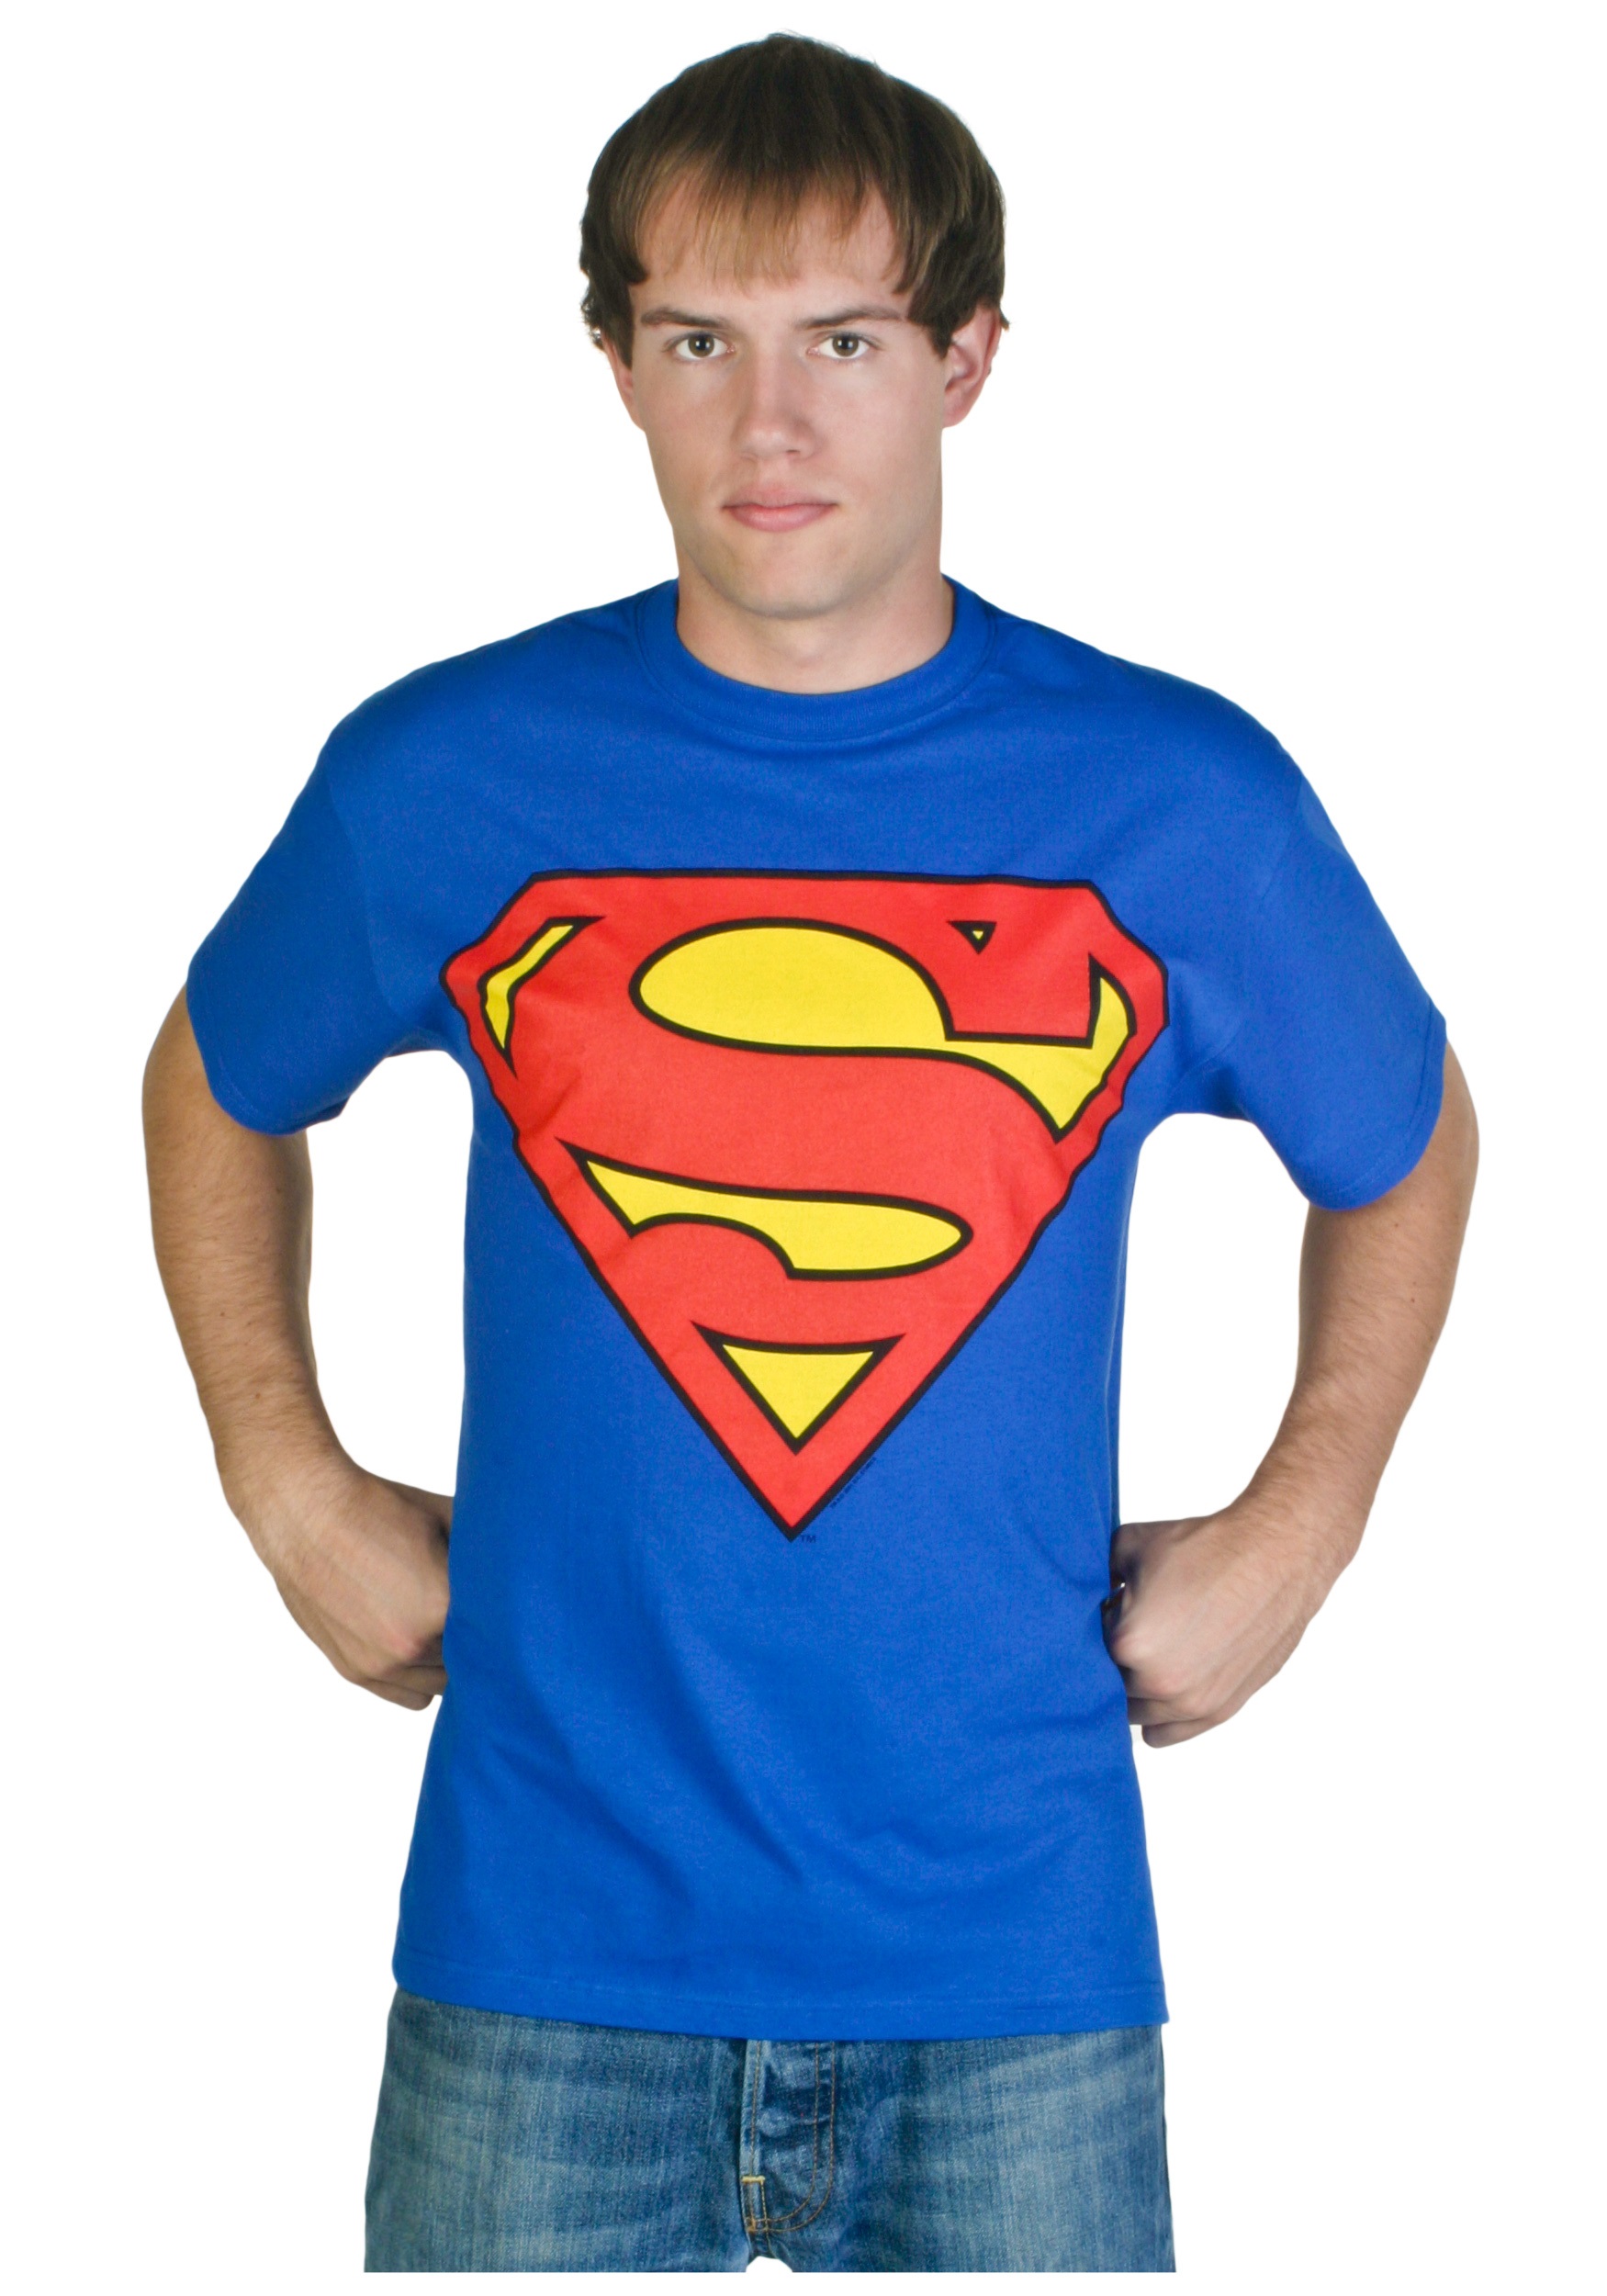 superman-shield-t-shirt